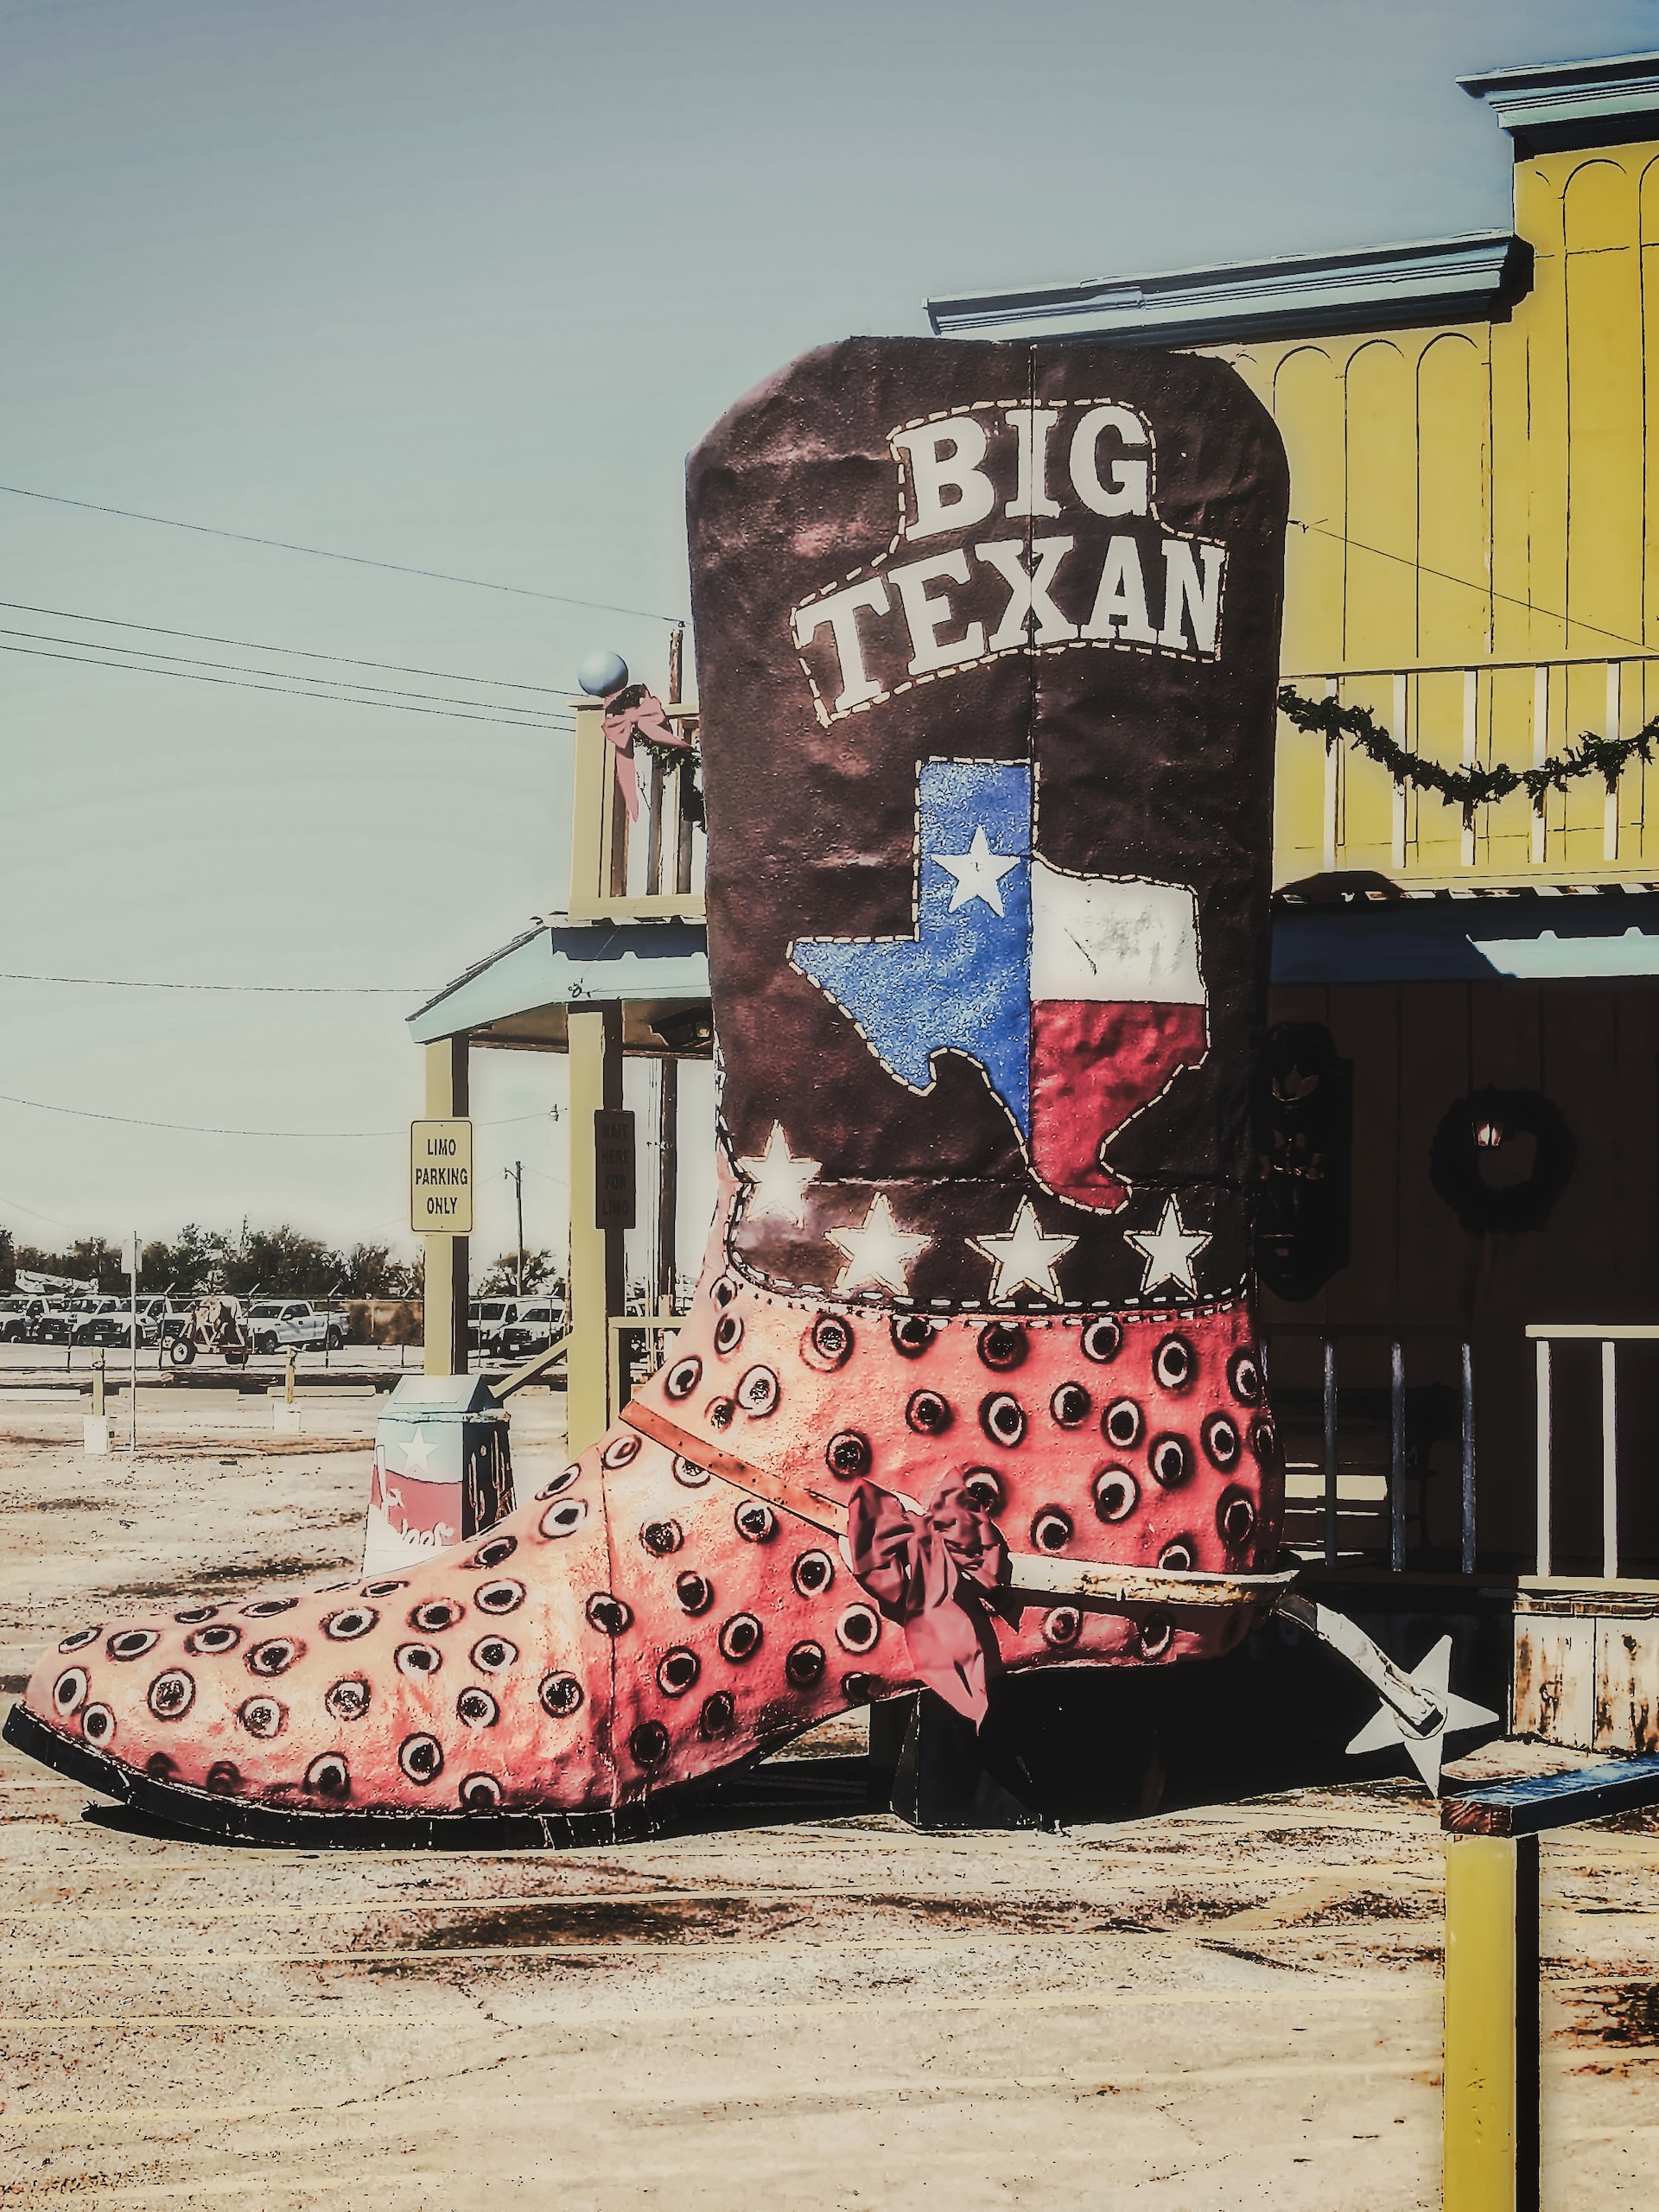 Big Texas at Amarillo TX